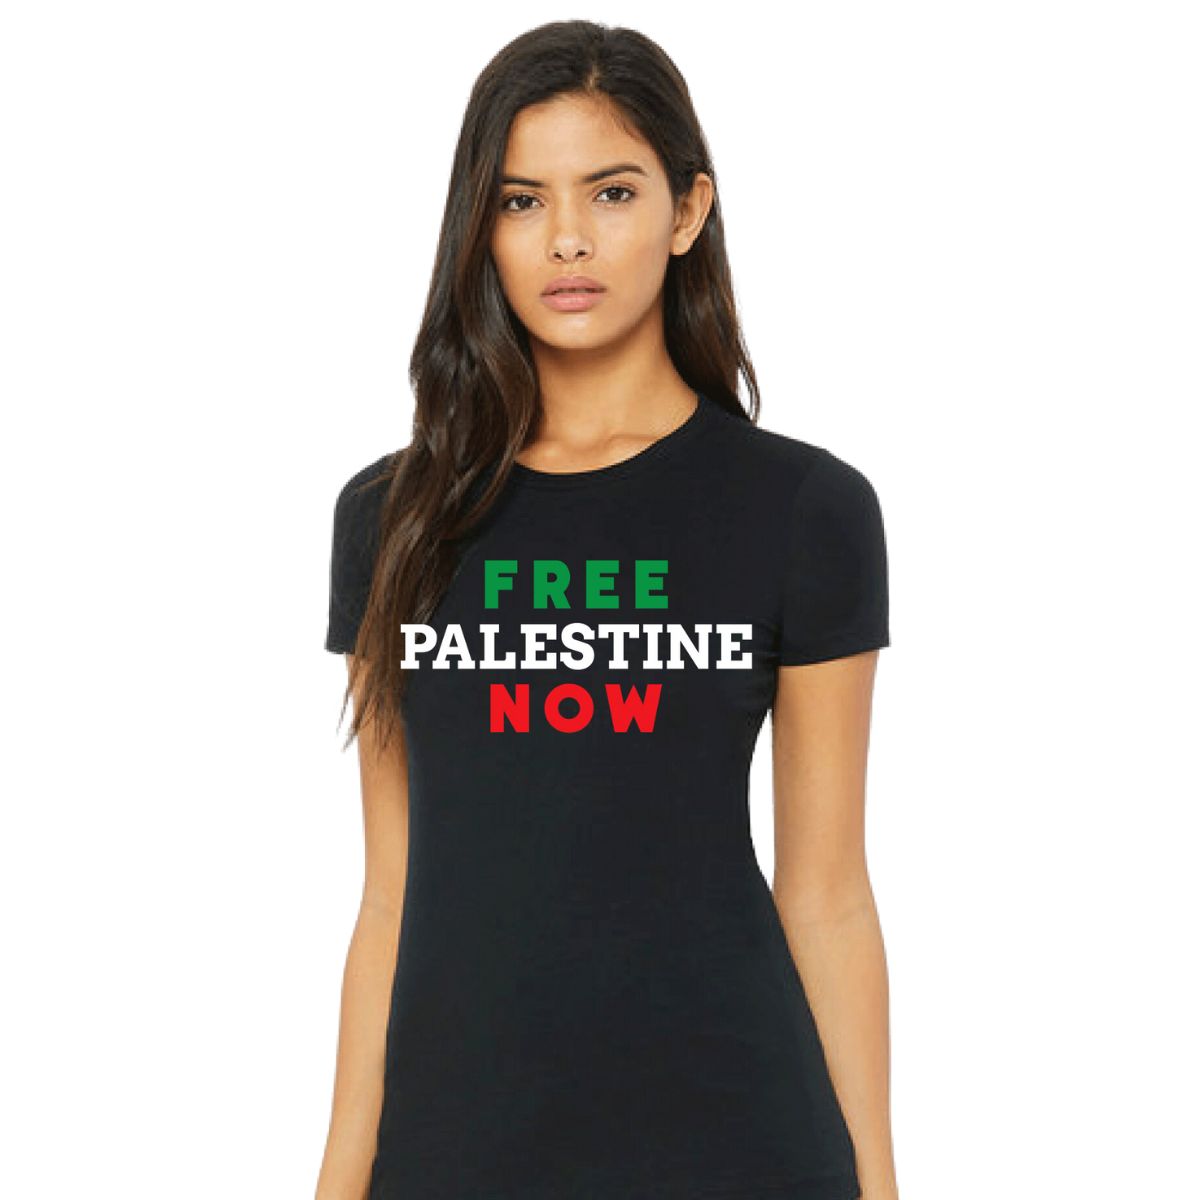 "Free Palestine Now" T-Shirts